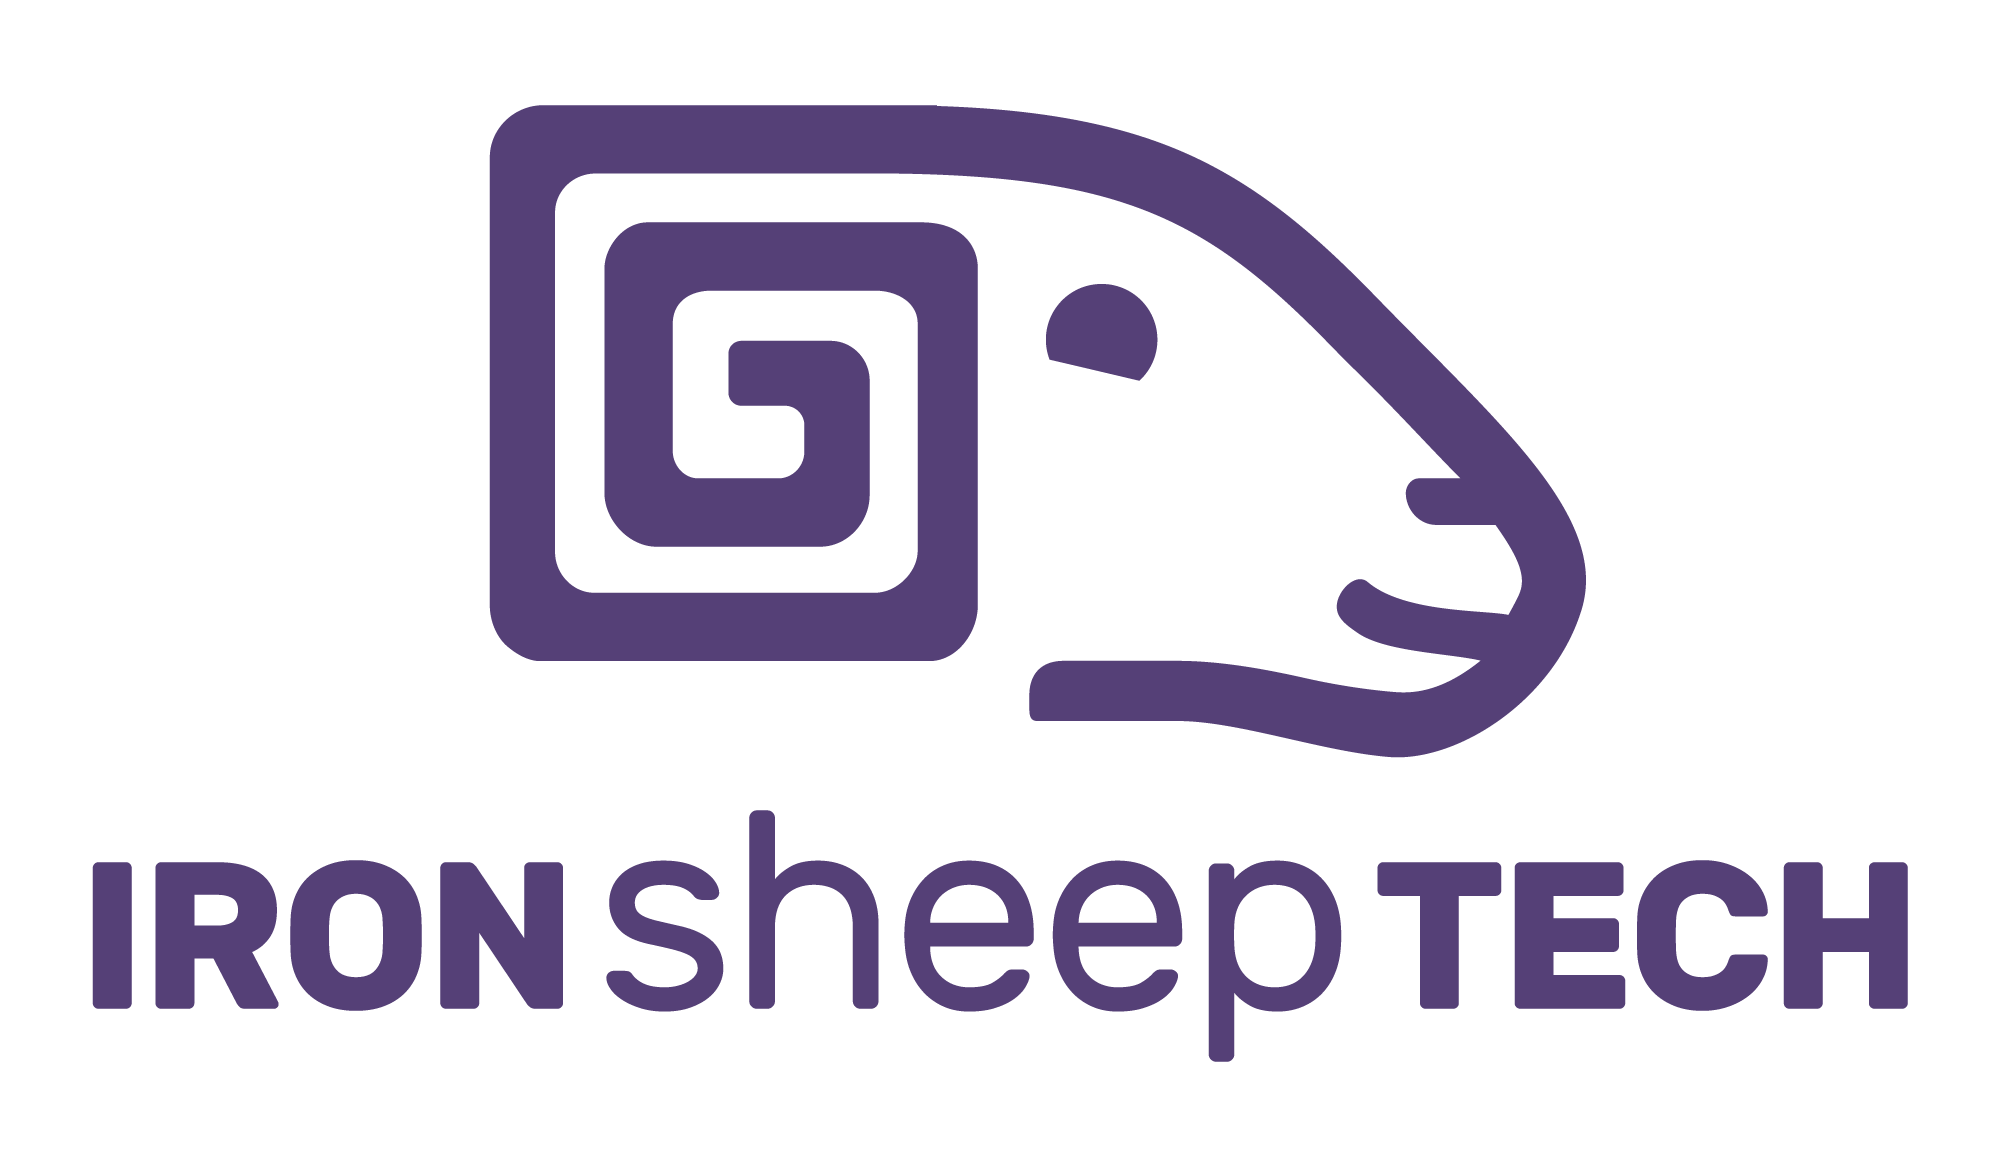 IRON Sheep TECH